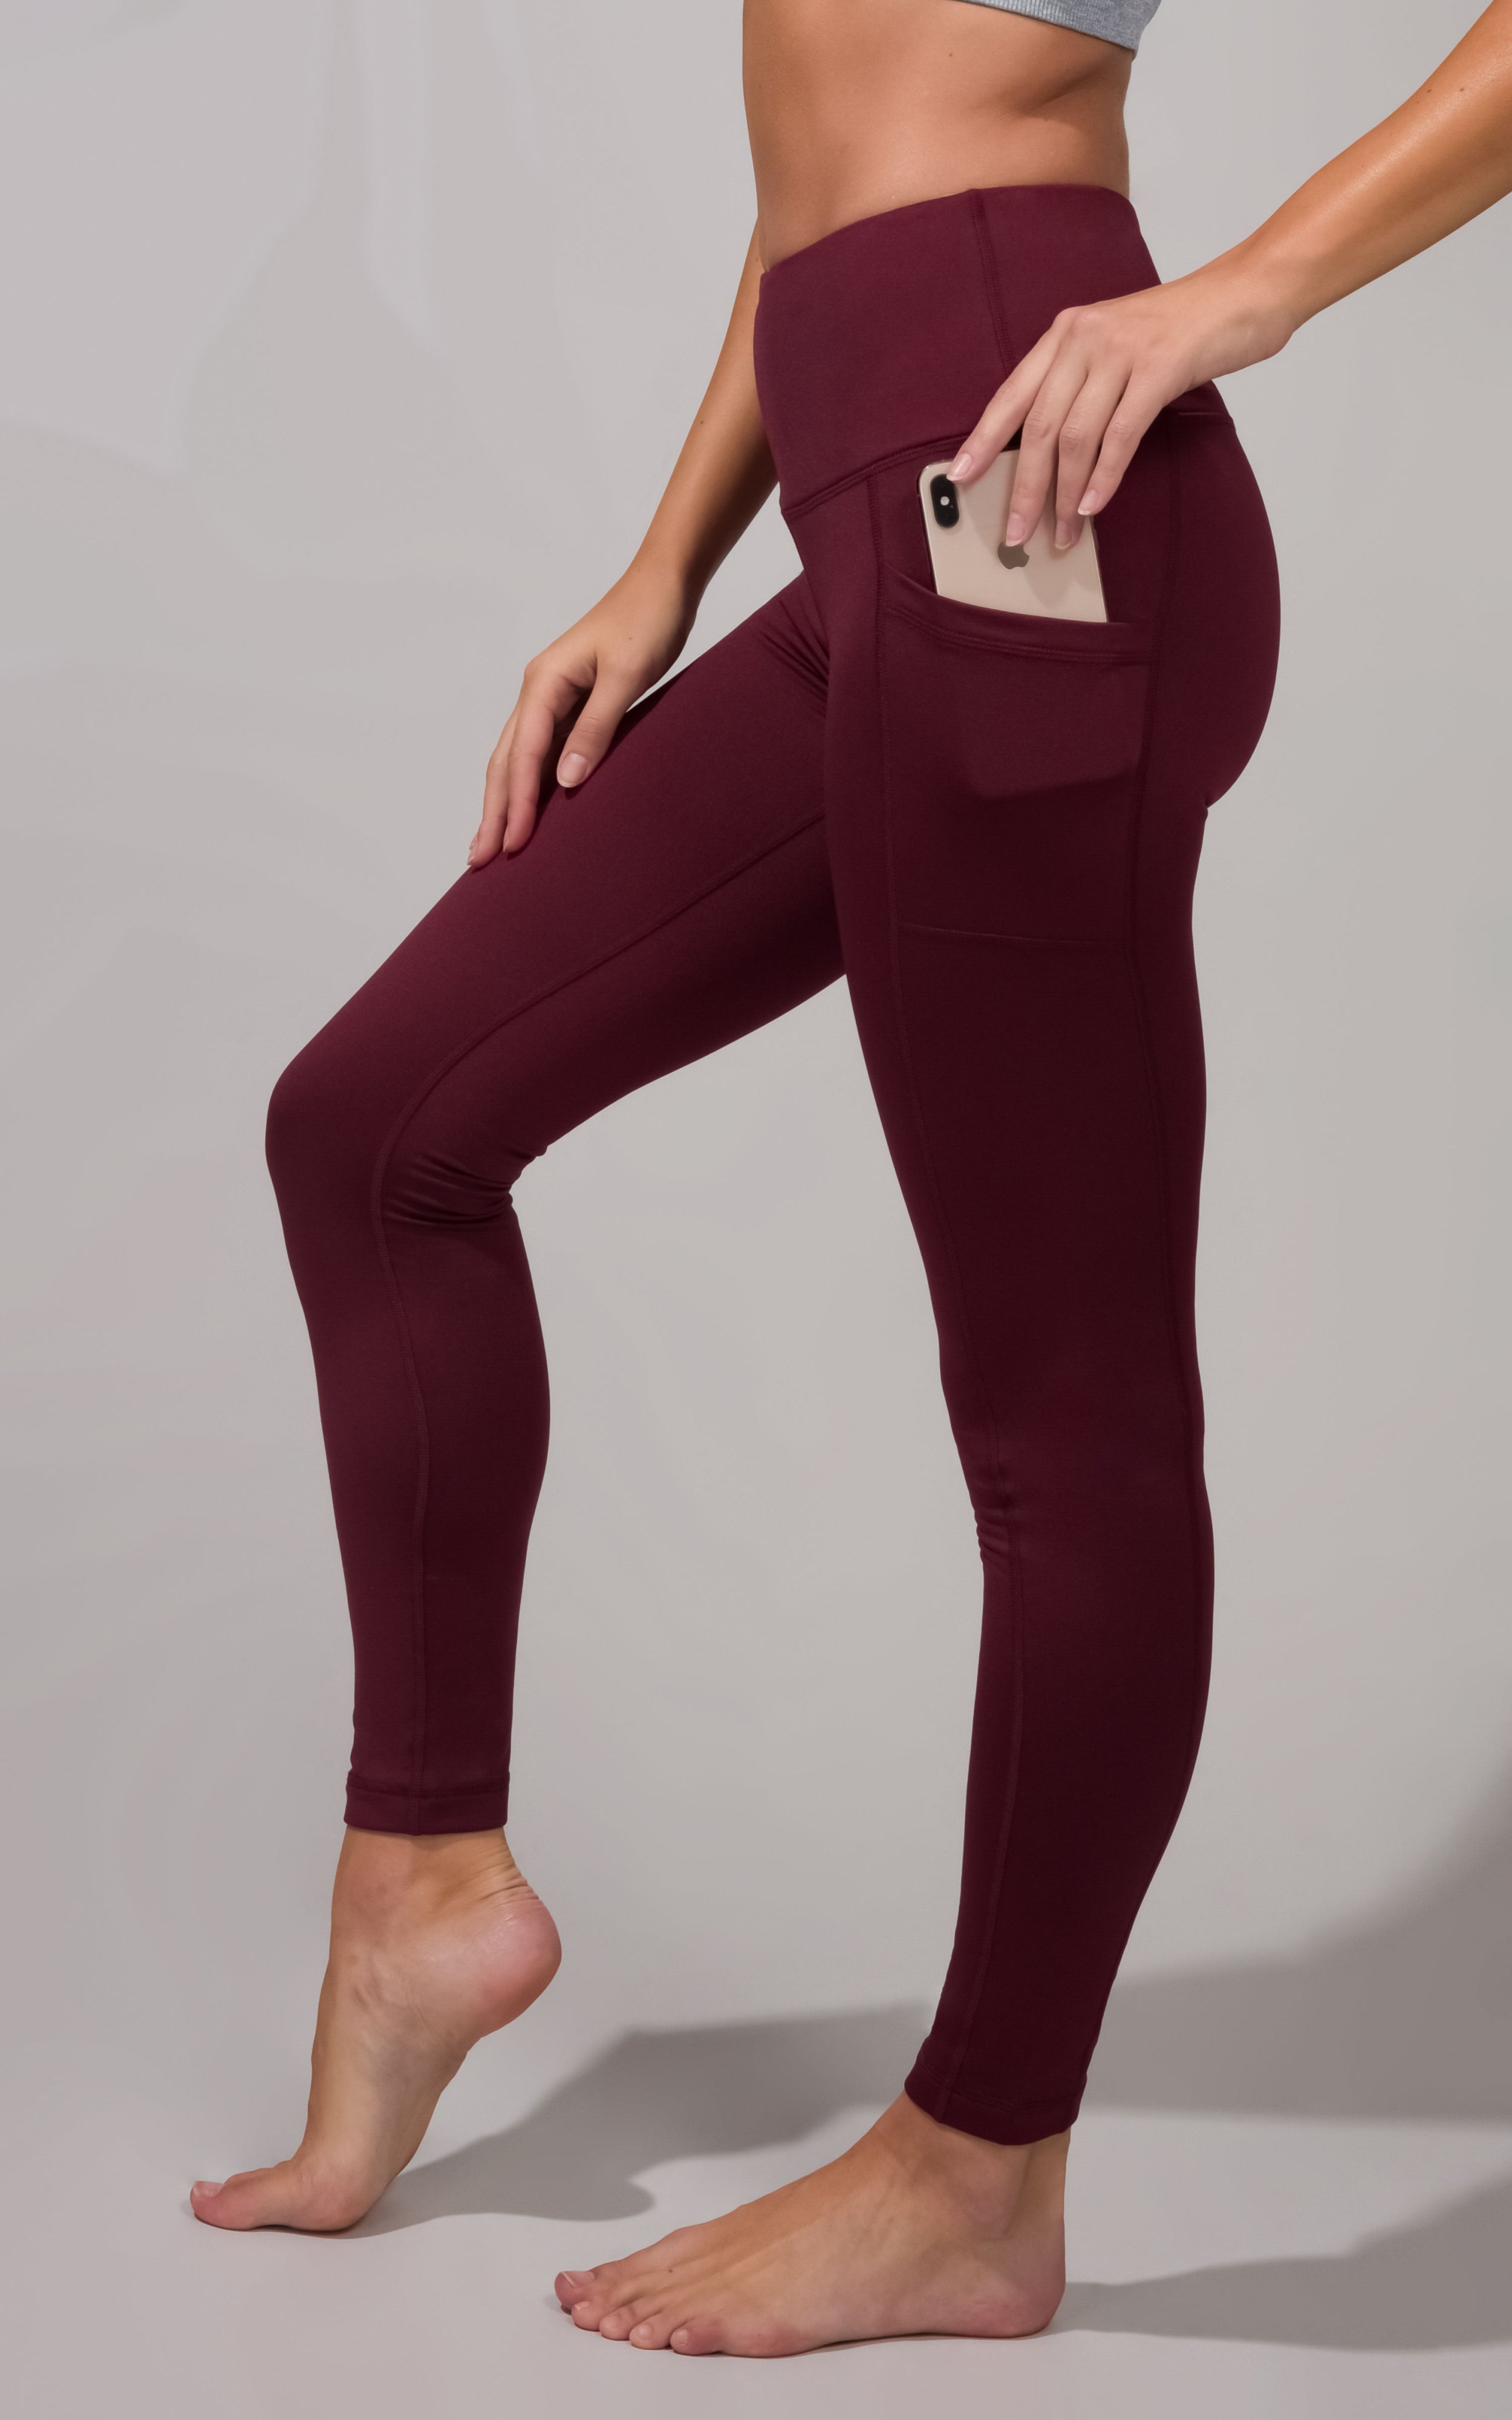 Women's Fleece Lined Winter Leggings High Waisted Thermal Warm Yoga Pants,  can | eBay